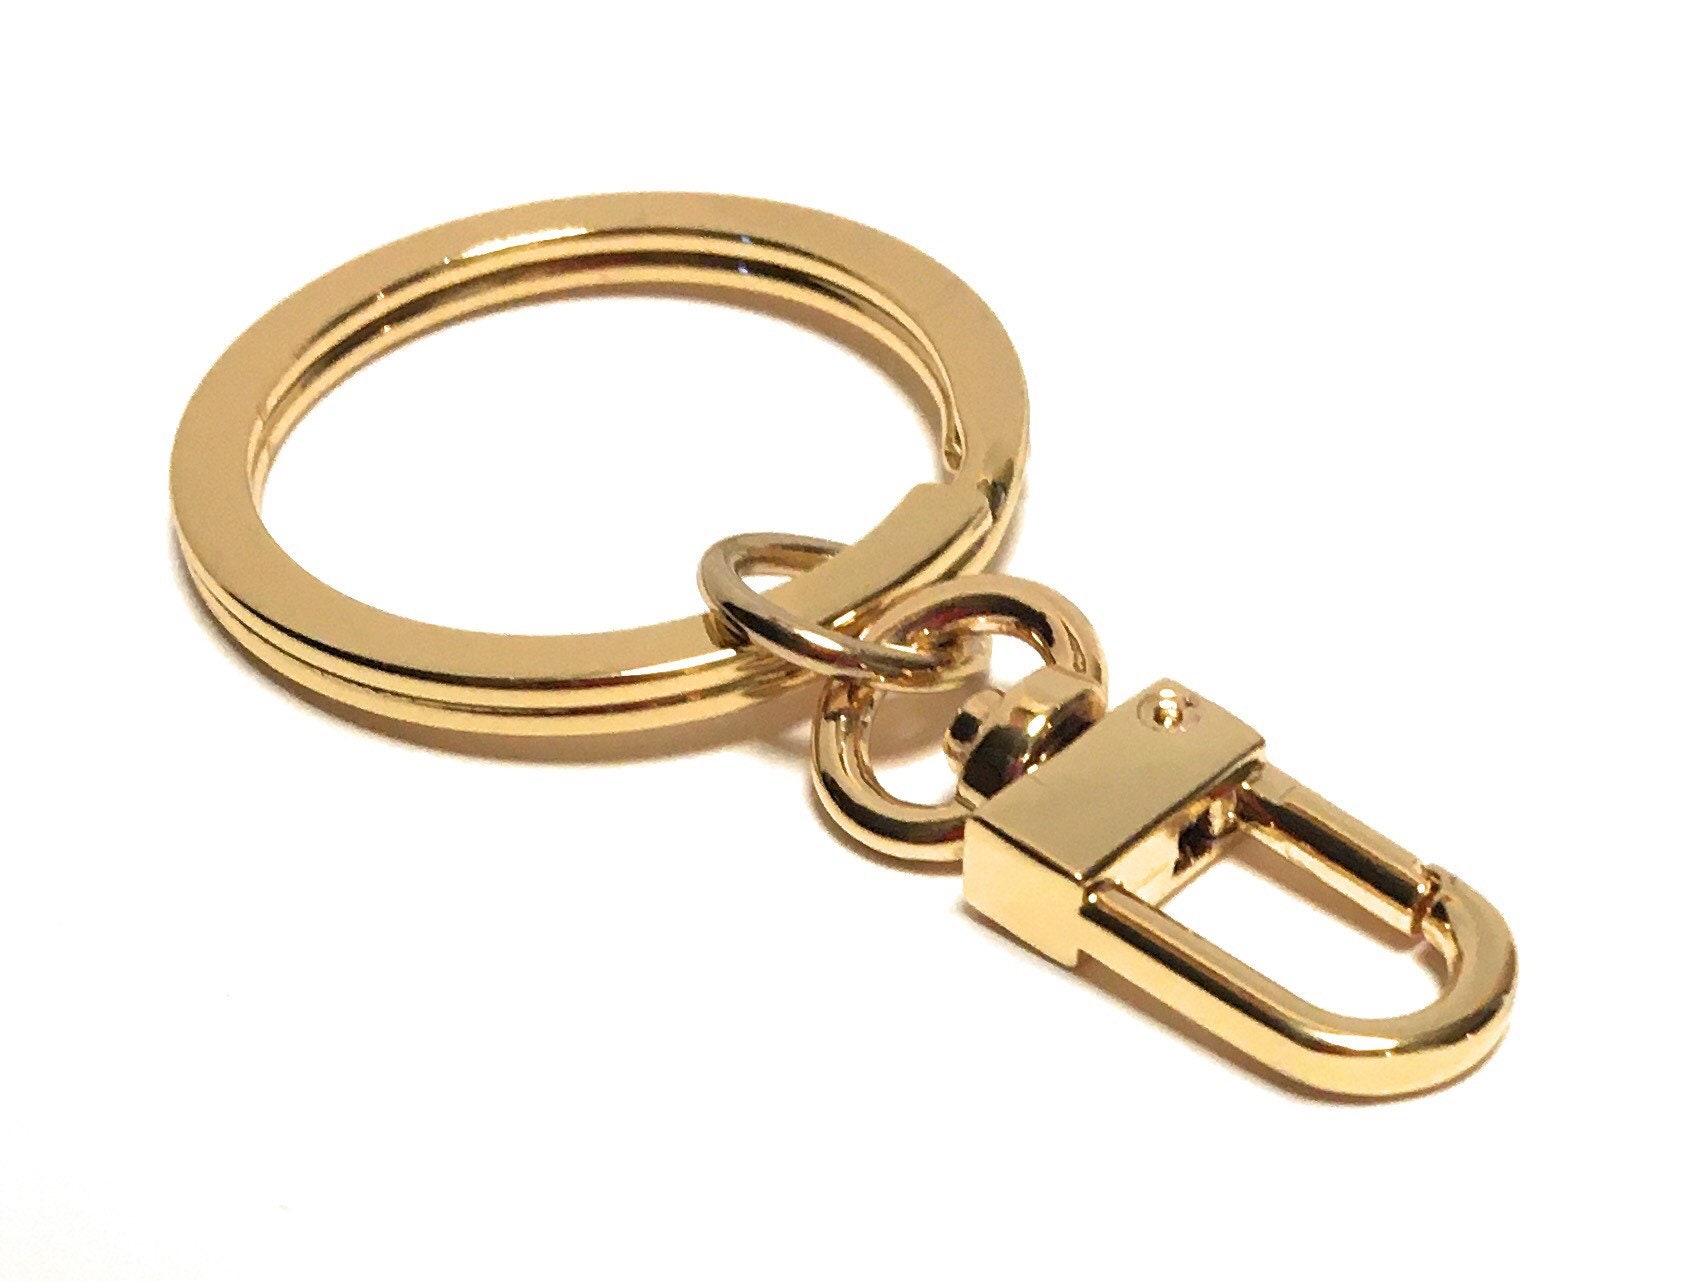 Louis Vuitton 6 Ring Key Holder As a Wristlet www.modelvale.com  #louisvuitton #lv #lvkeyhold…